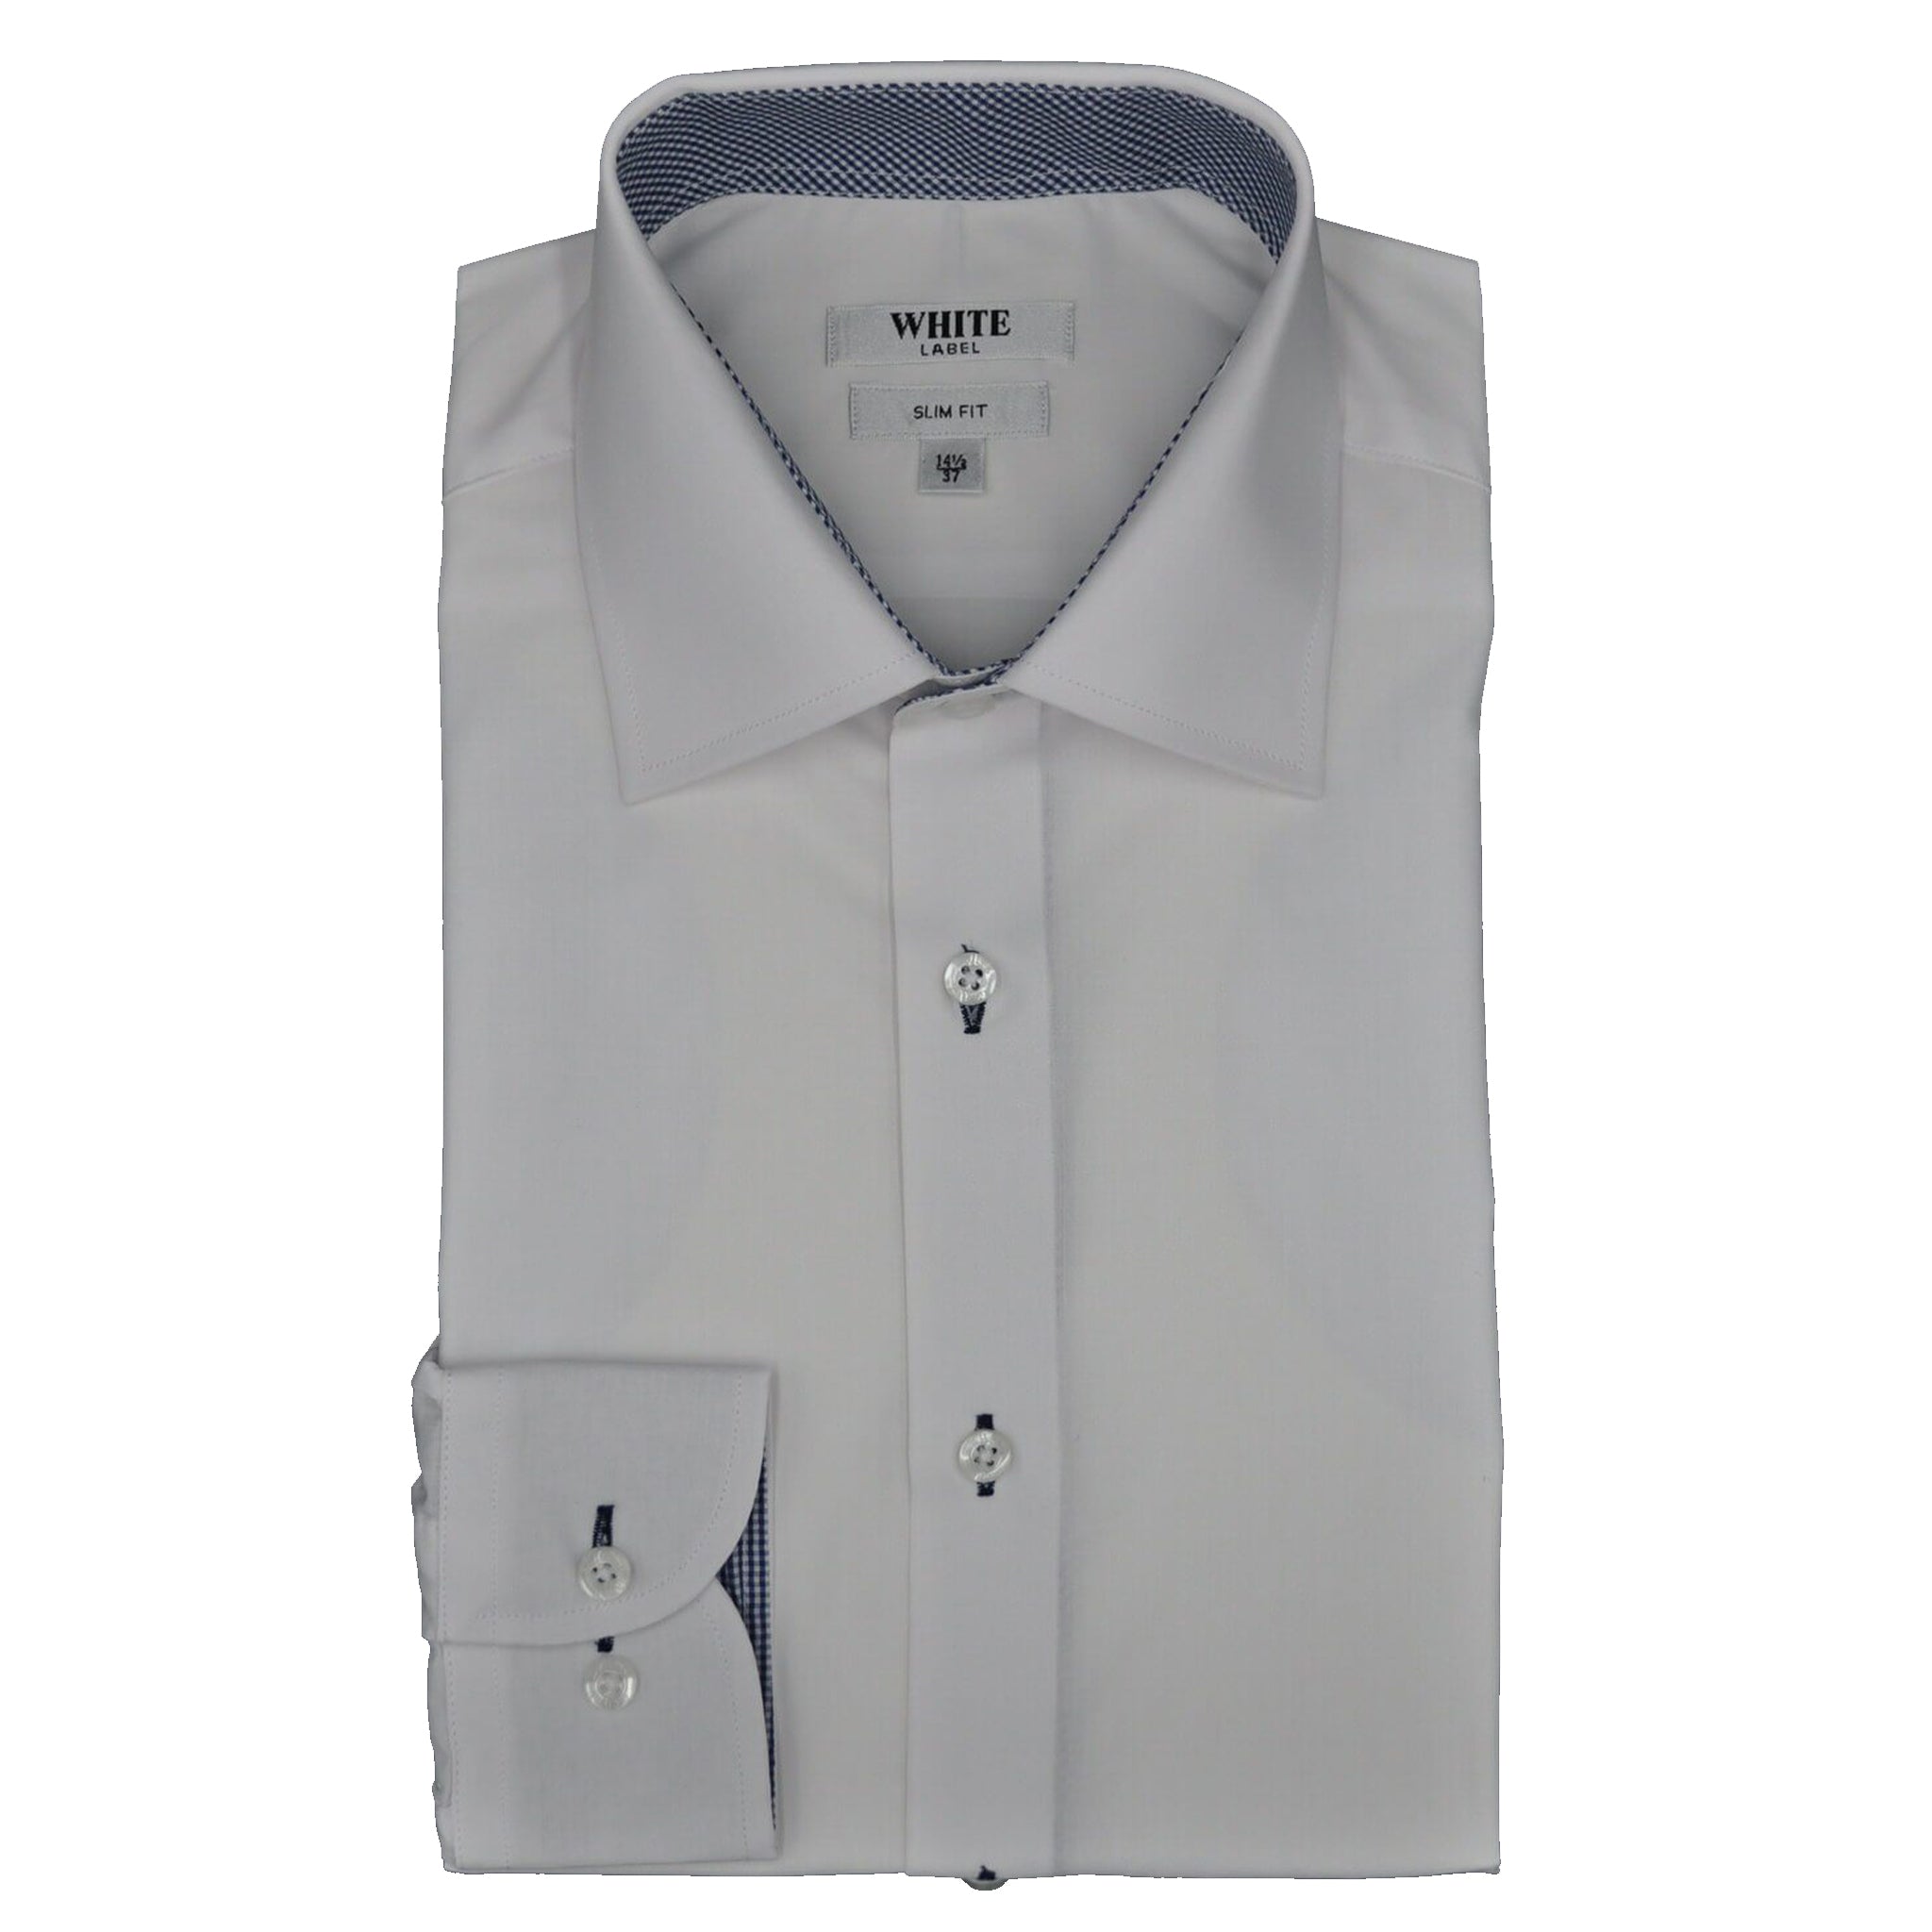 White Label - Slim Fit Shirt